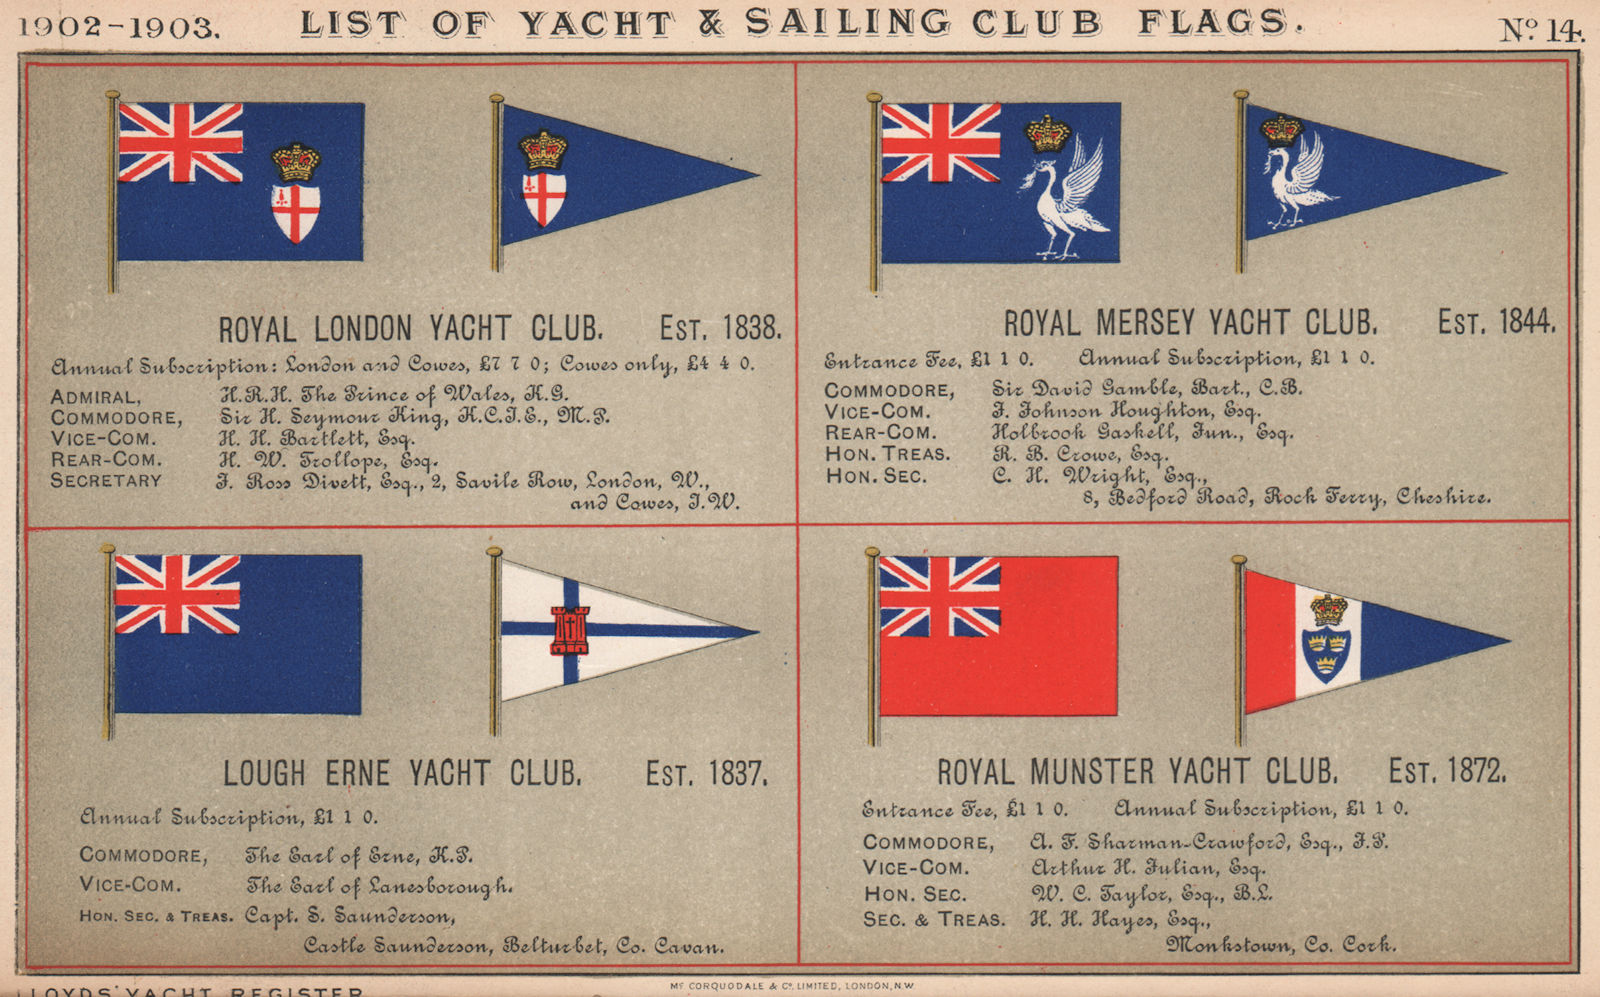 ROYAL YACHT & SAILING CLUB FLAGS. London. Mersey. Lough Erne. Munster 1902